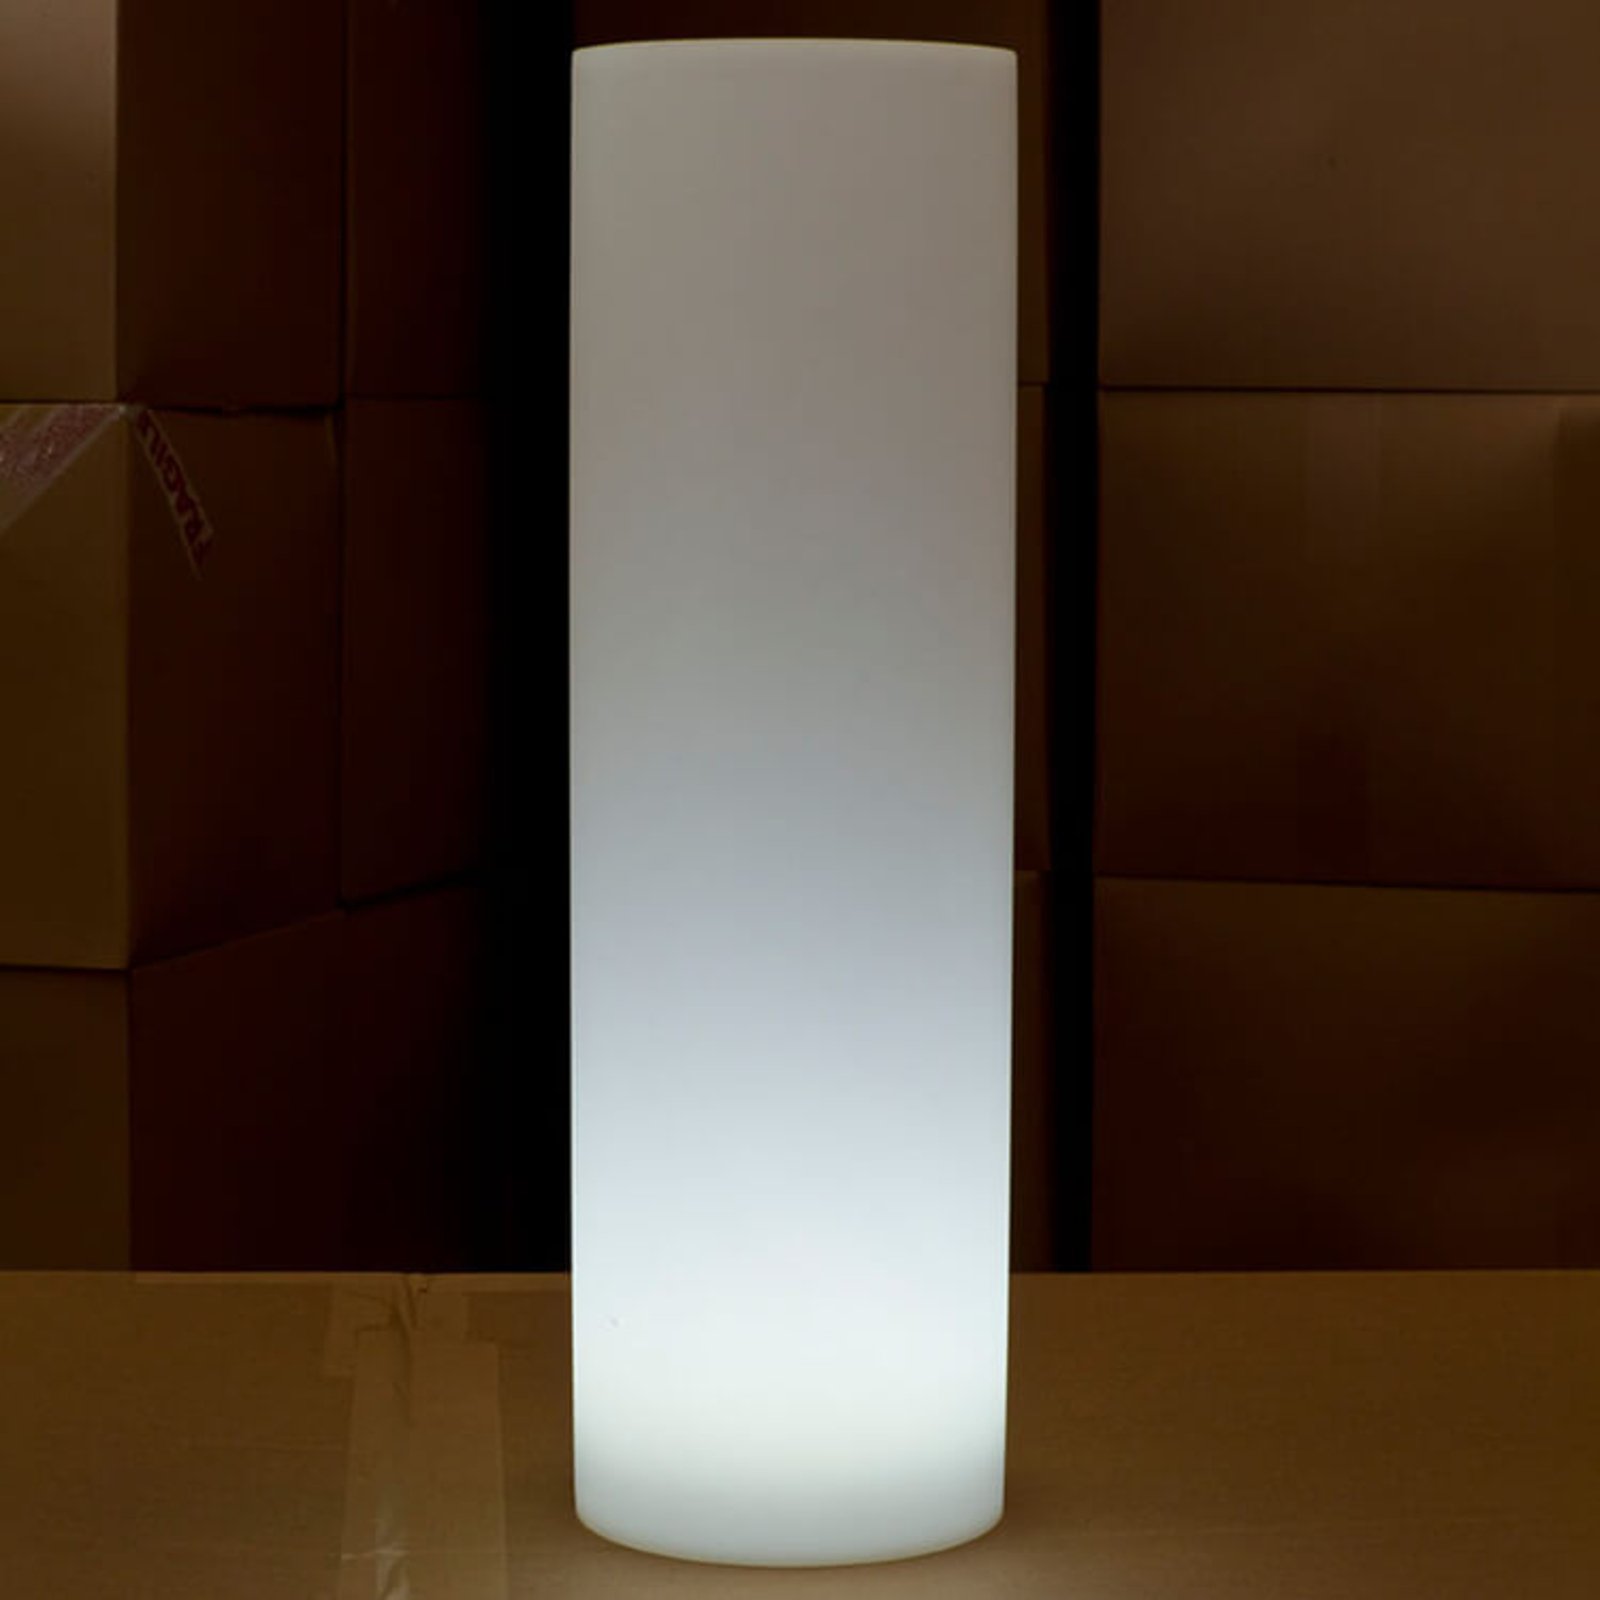 Tower - LED decorative light controllable via App